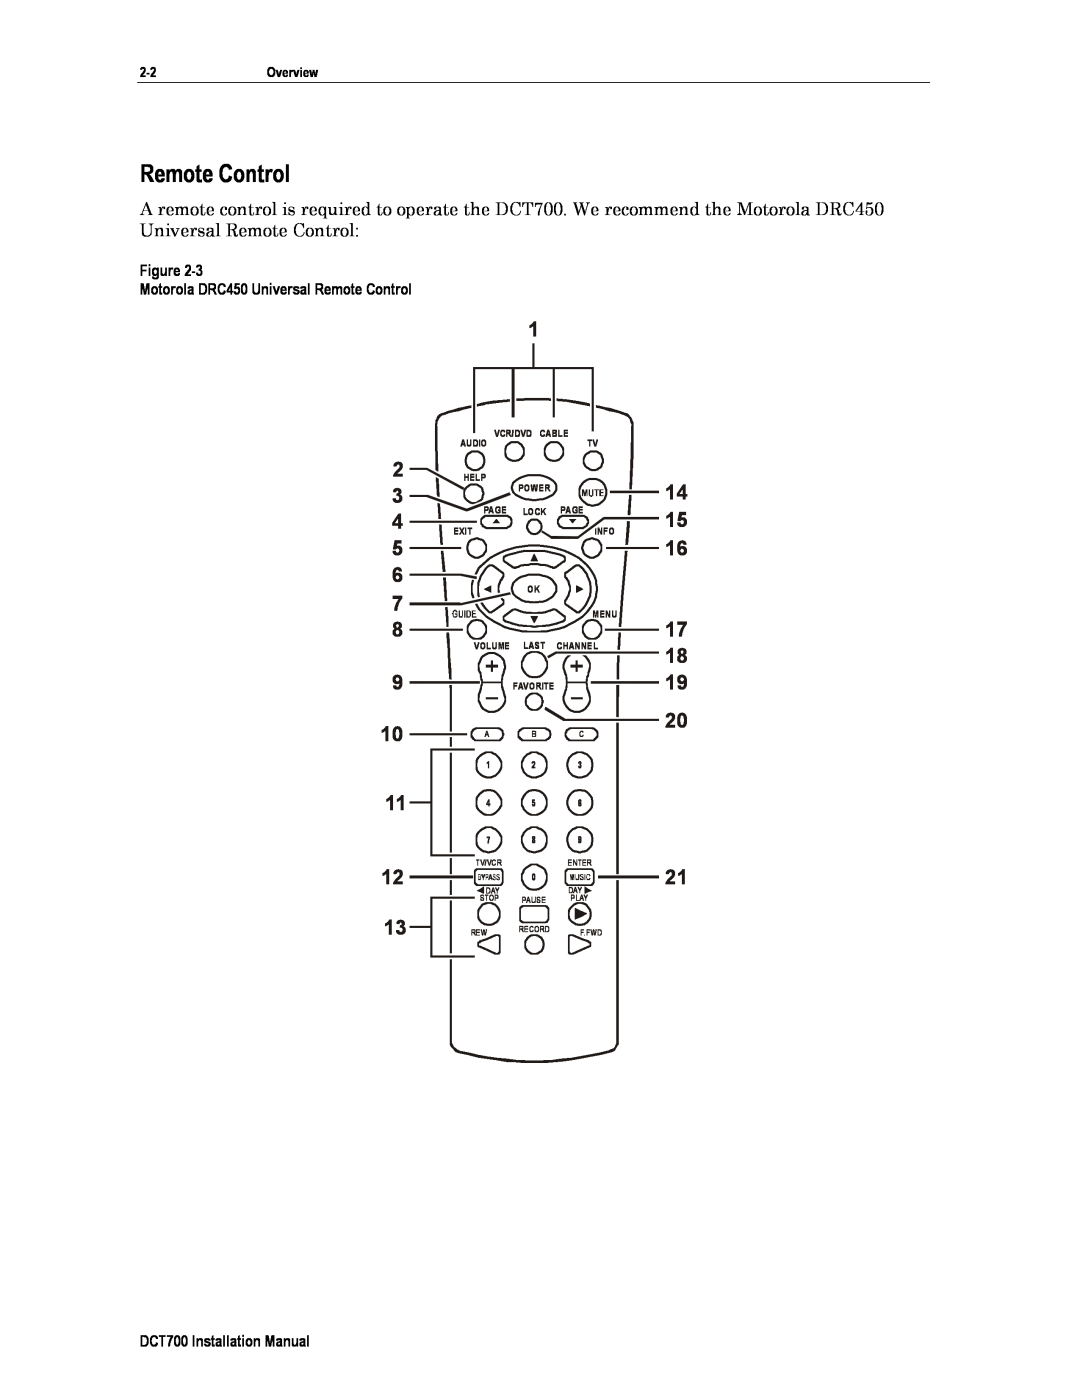 Motorola DTC700 14 15 16 17 18 19 20 21, Figure Motorola DRC450 Universal Remote Control, DCT700 Installation Manual 